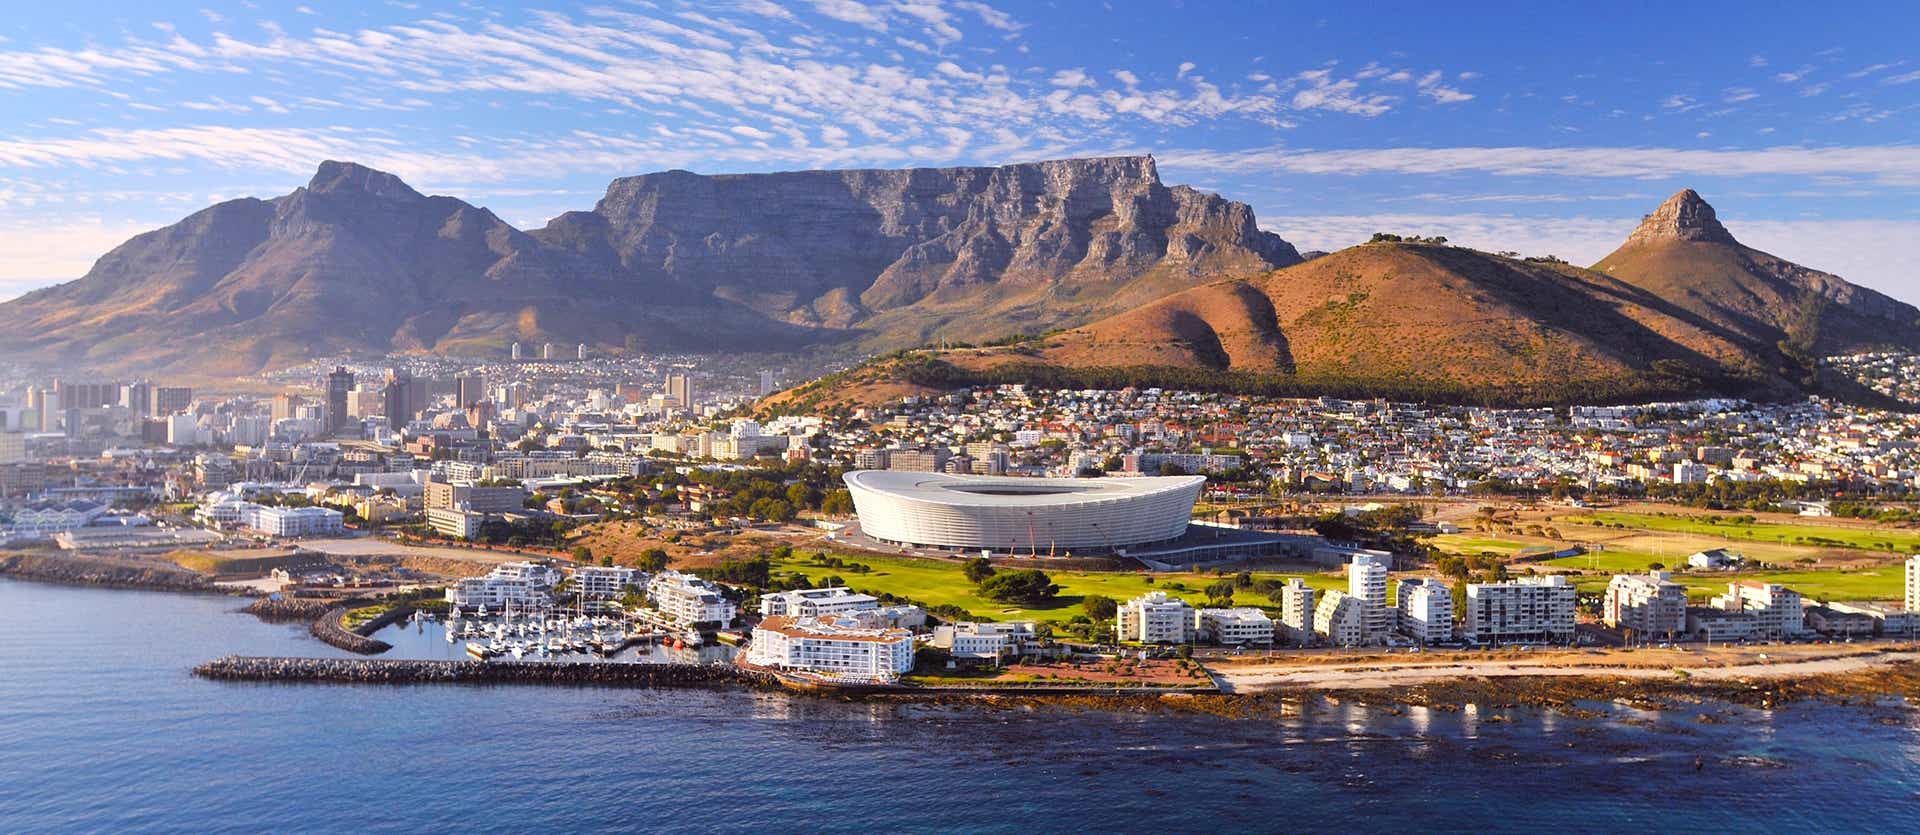 Cape Town Stadium <span class="iconos separador"></span> Cape Town <span class="iconos separador"></span> South Africa